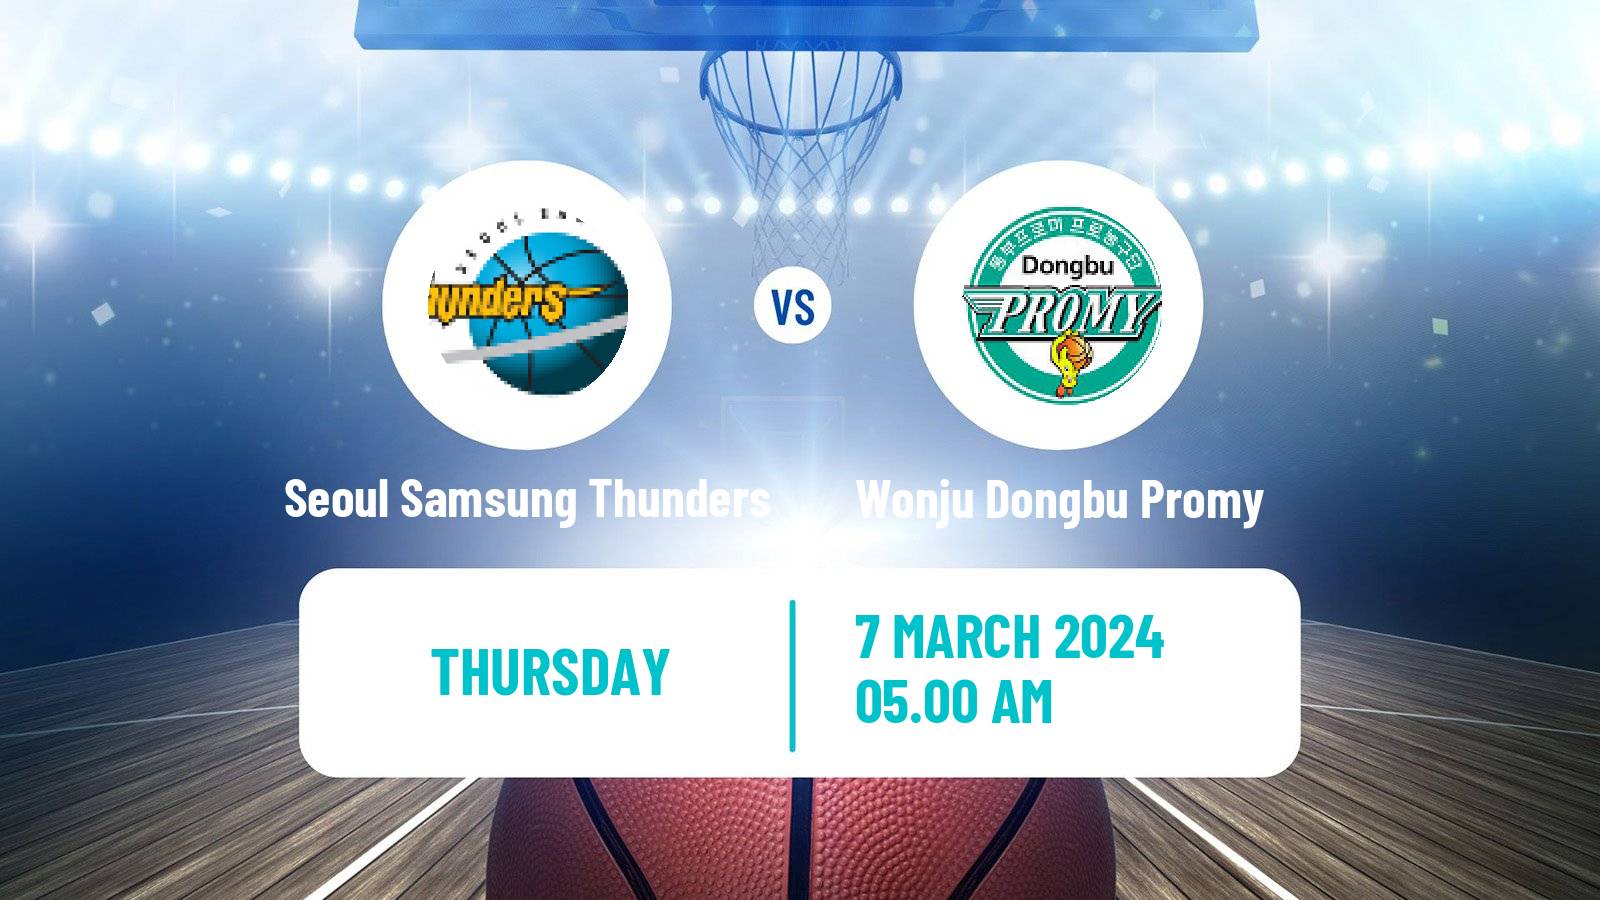 Basketball KBL Seoul Samsung Thunders - Wonju Dongbu Promy